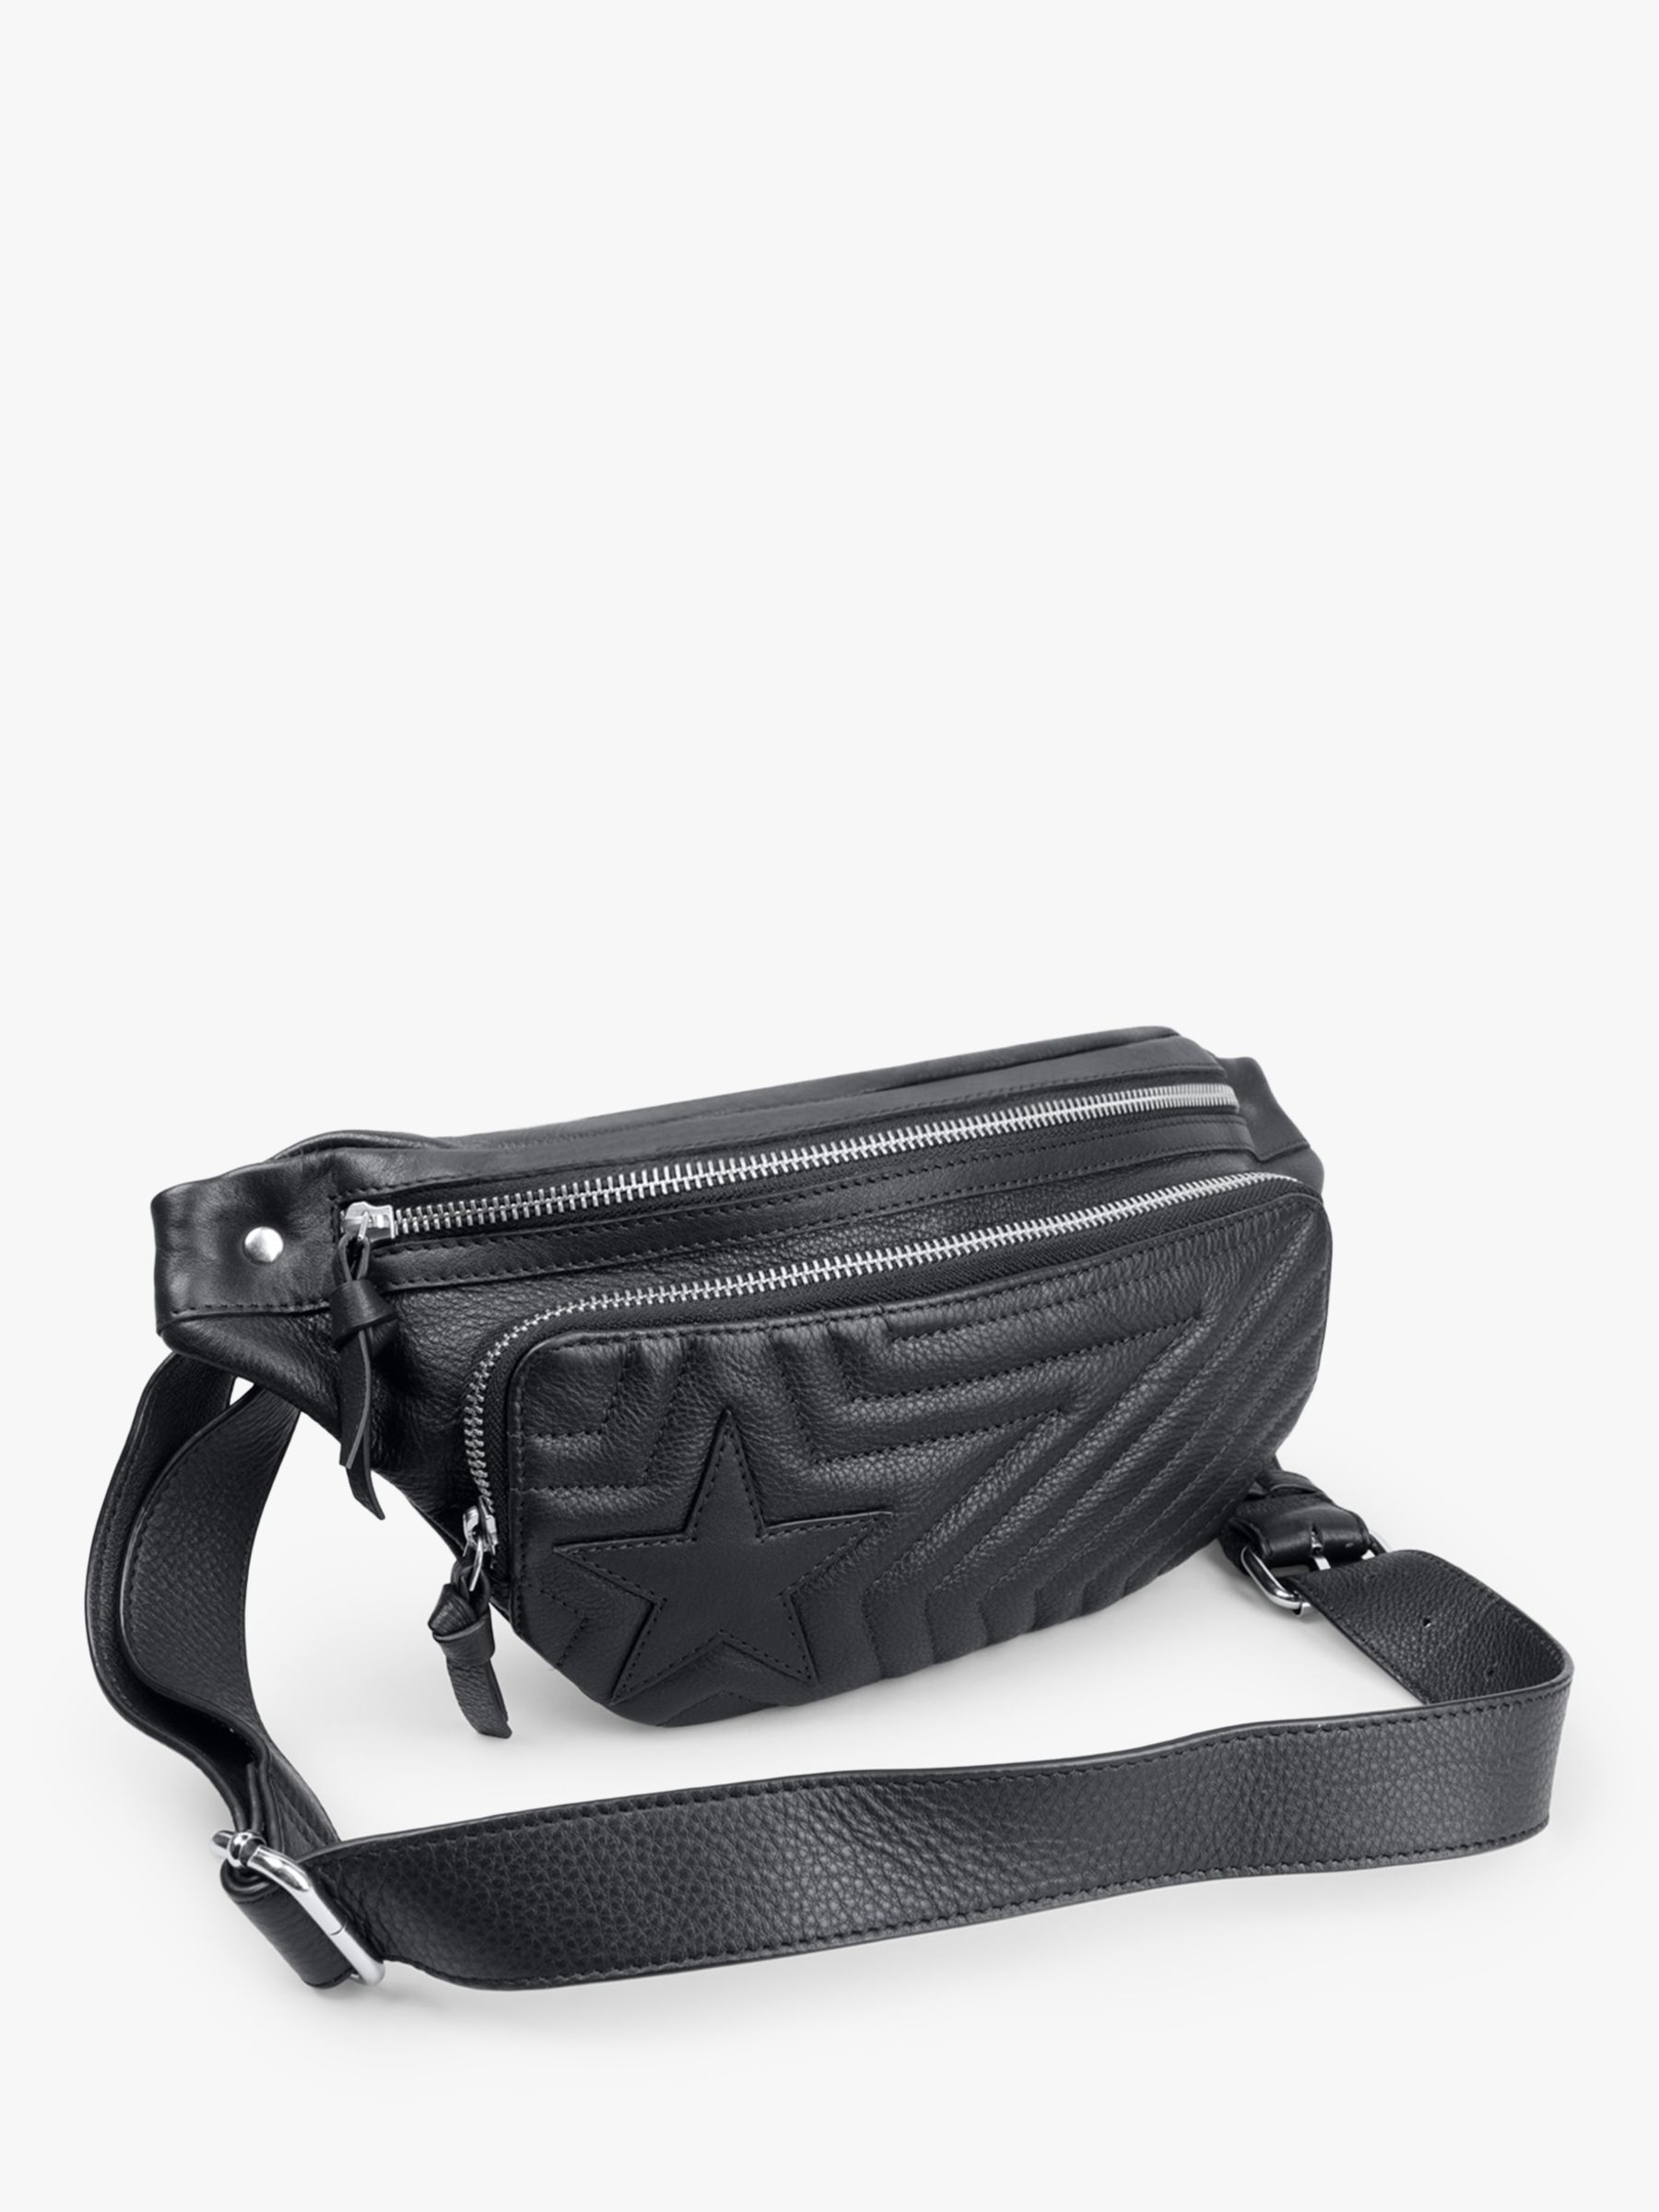 HUSH Coralie Star Detail Leather Bum Bag, Black at John Lewis & Partners